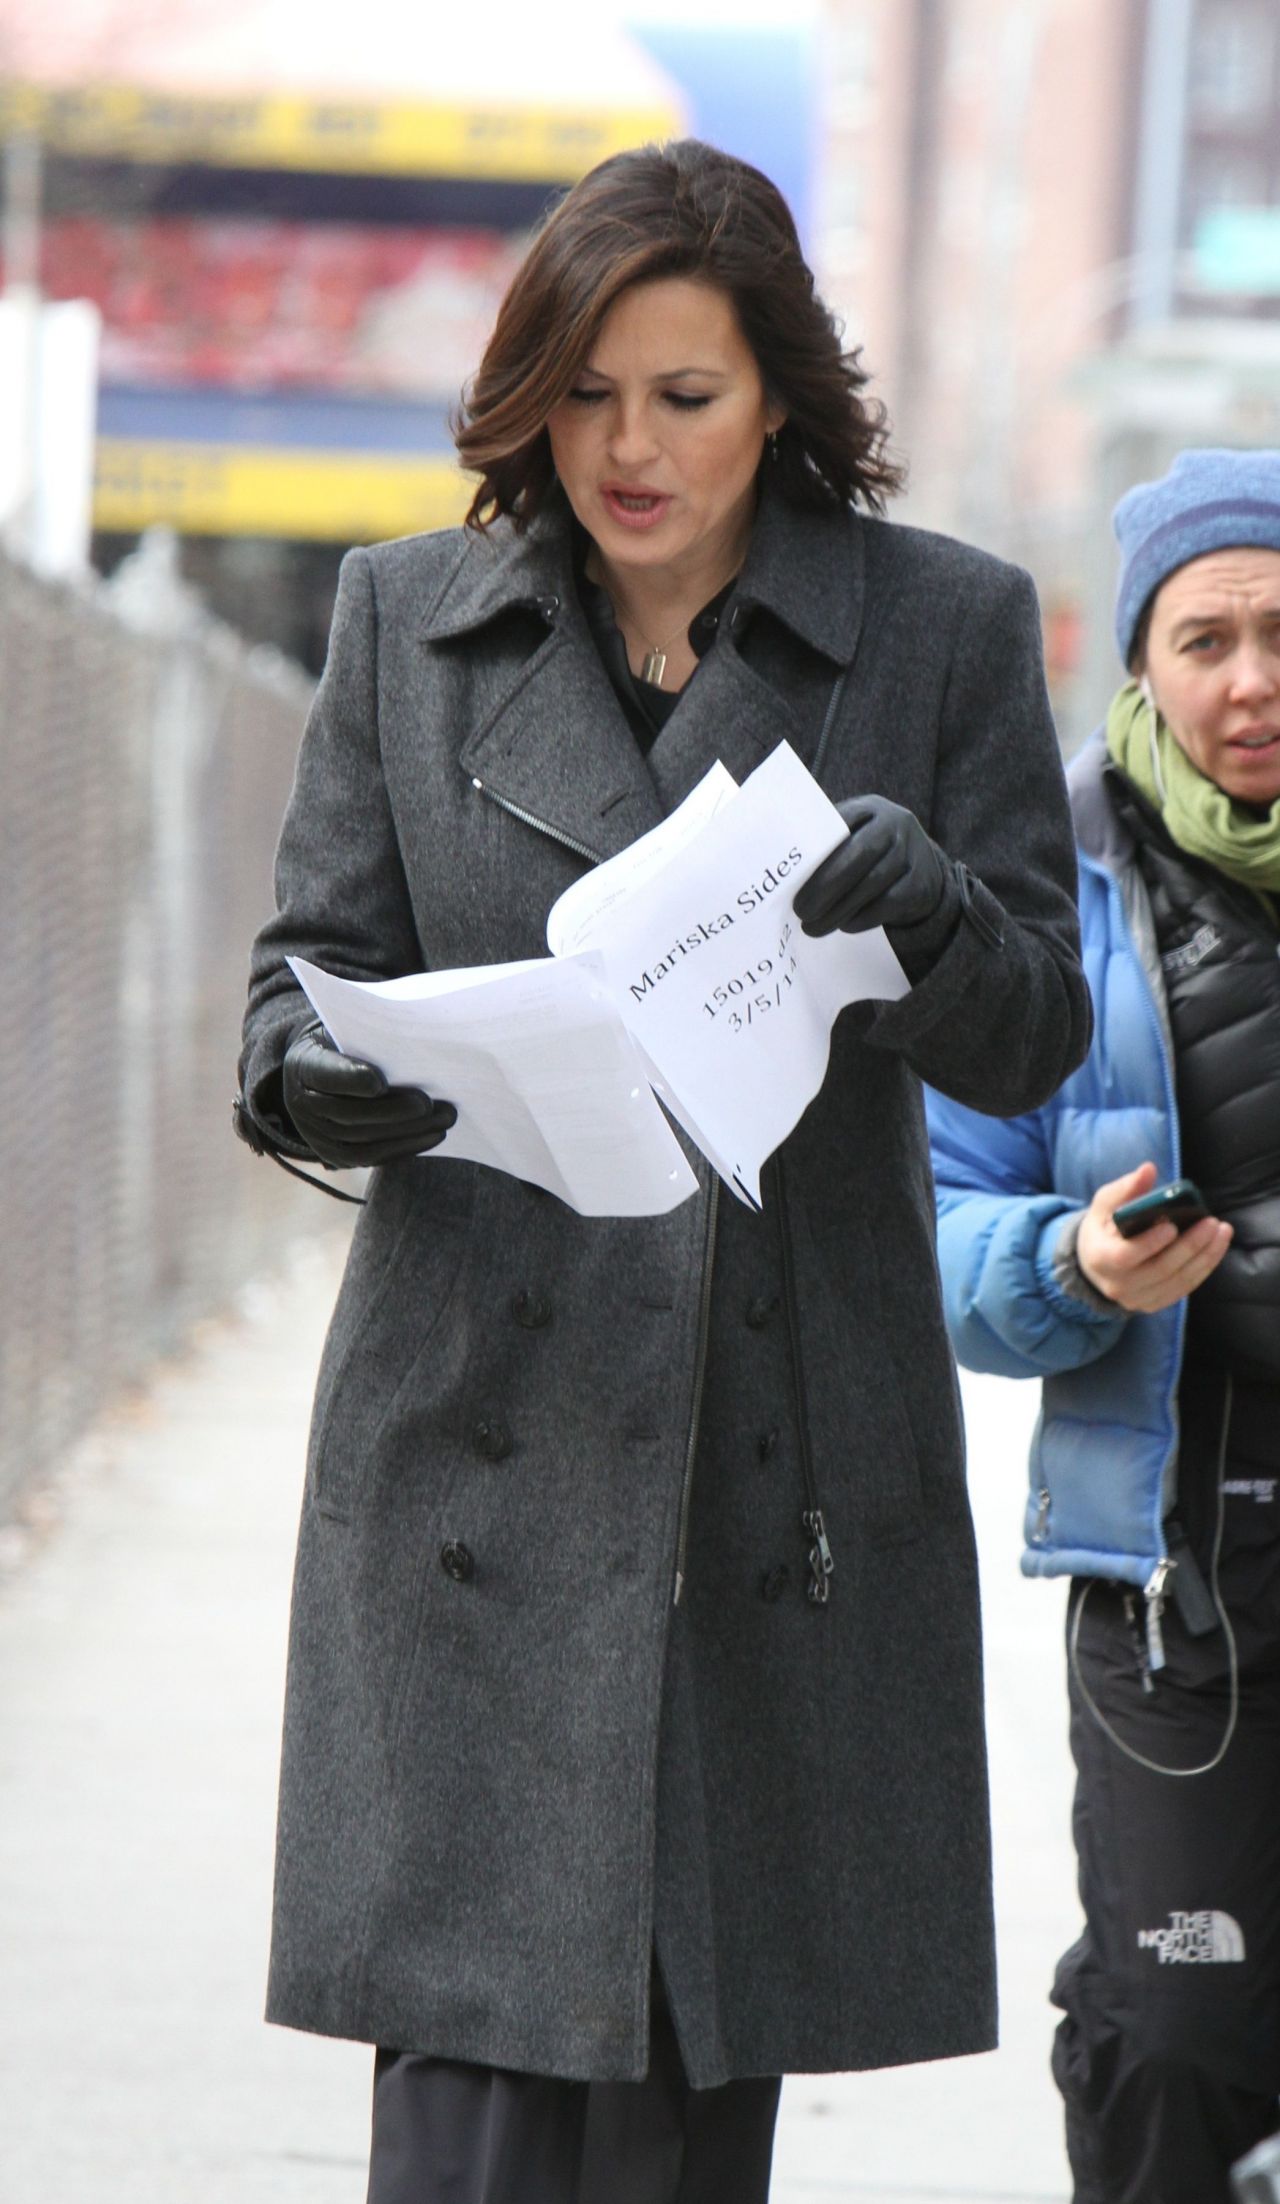 Mariska Hargitay - 'Law & Order: SVU' Set Photos, Queens NYC March 2014